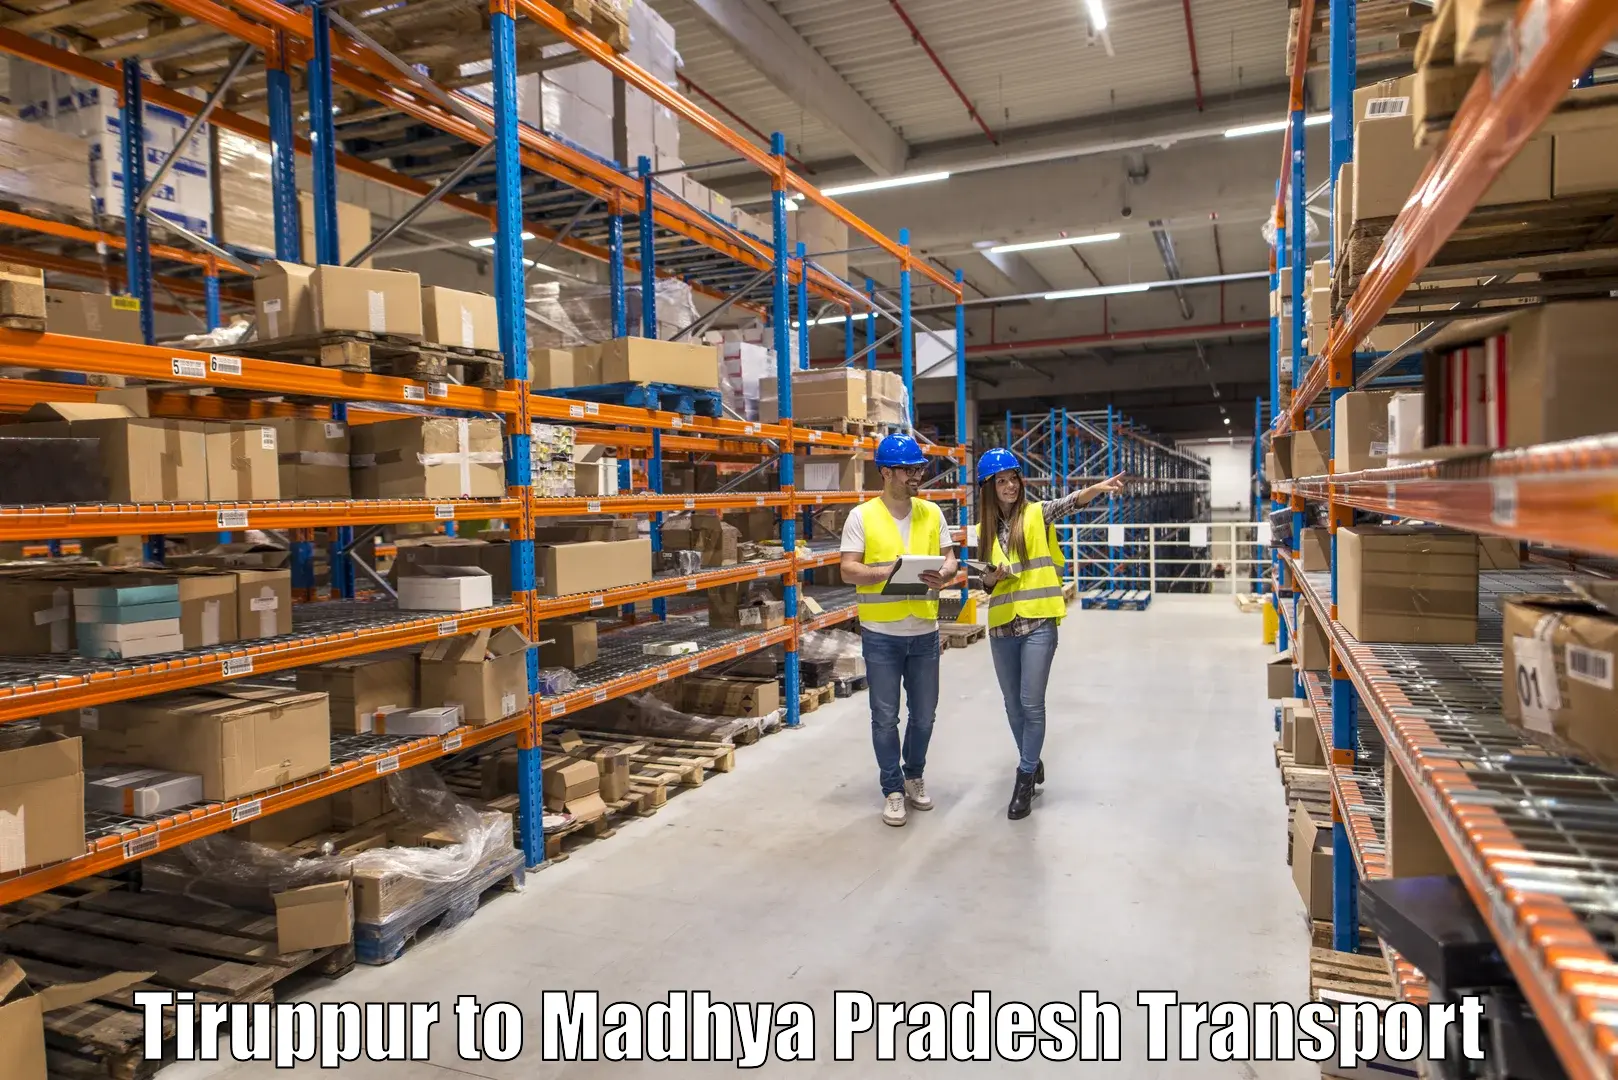 Furniture transport service in Tiruppur to Madhya Pradesh